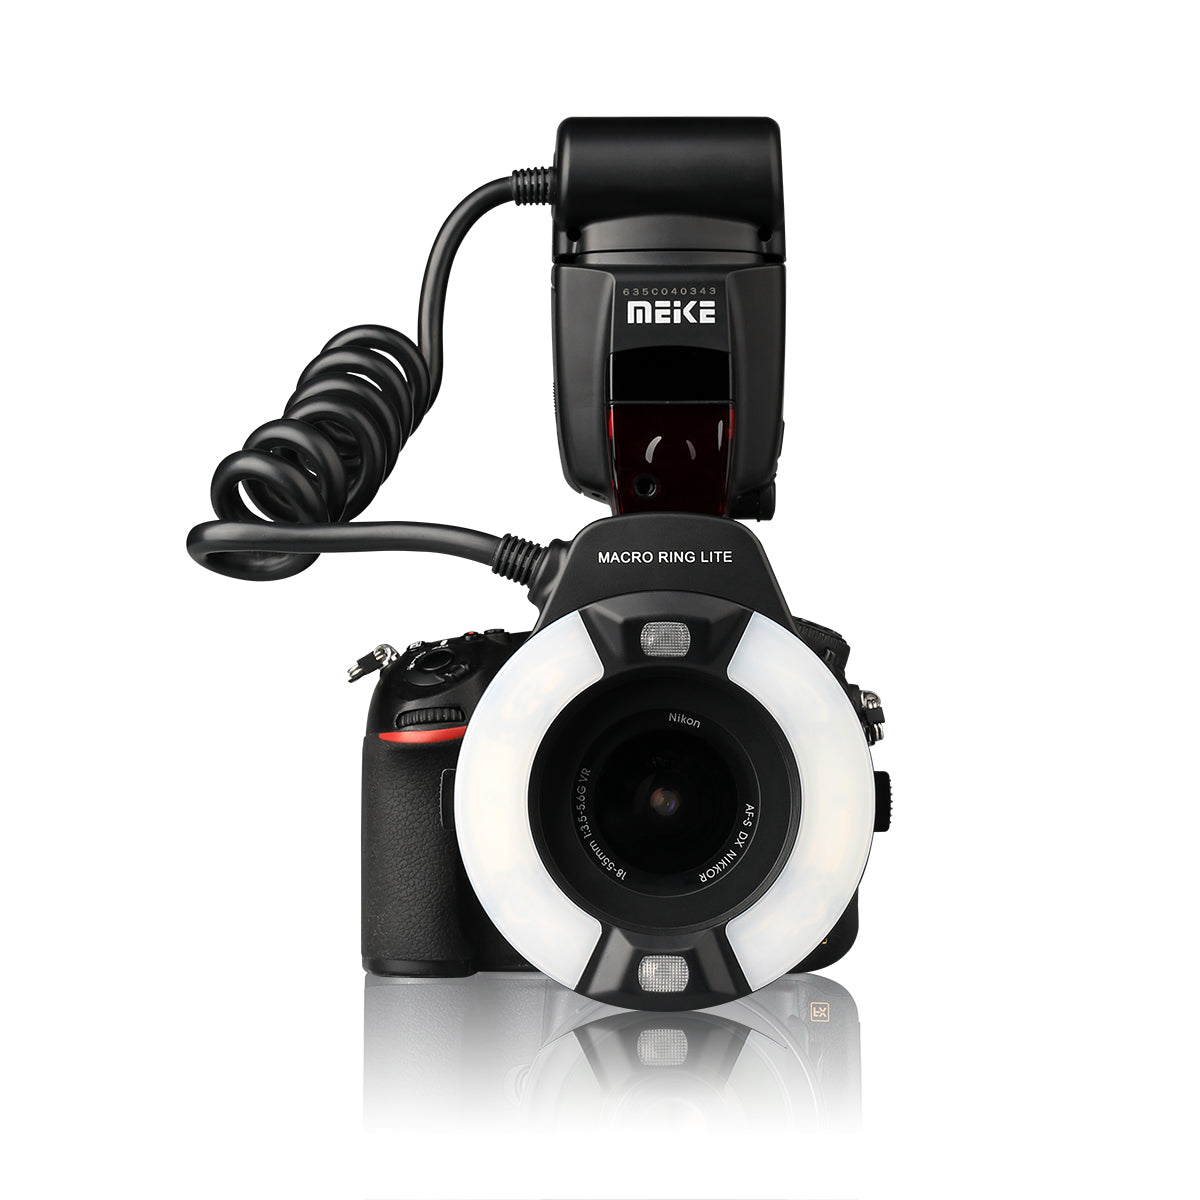 Nissin MF18 Macro Ring Flash for Canon - Double Bay Camera Shop